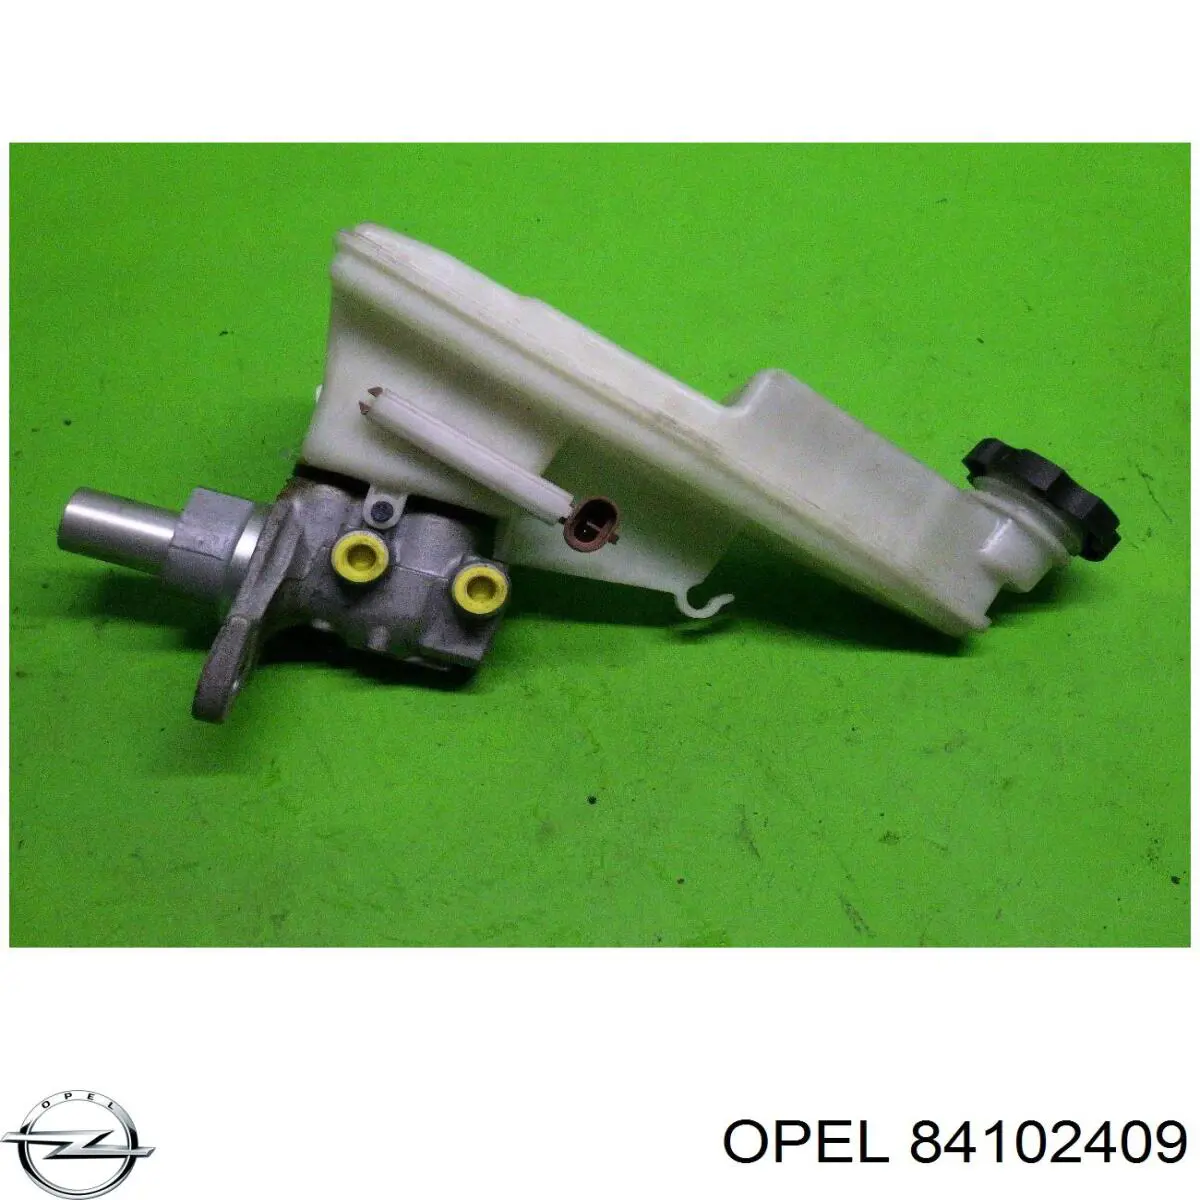 84102409 Opel cilindro mestre do freio